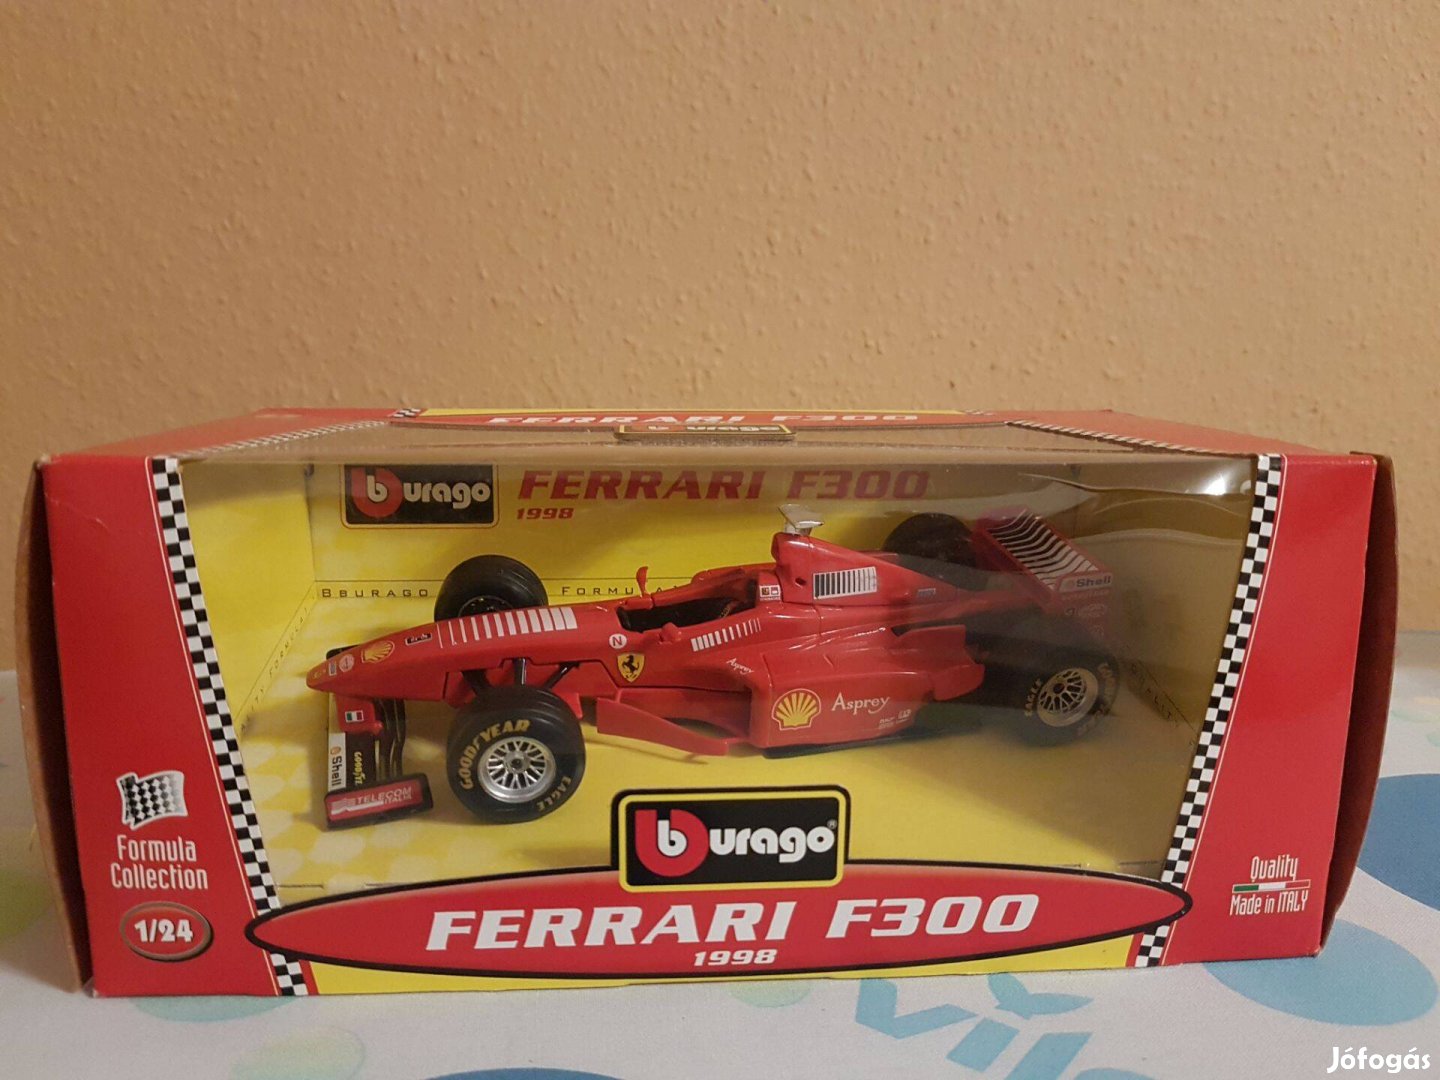 Ferrari F300 F1 Bburago játékautó